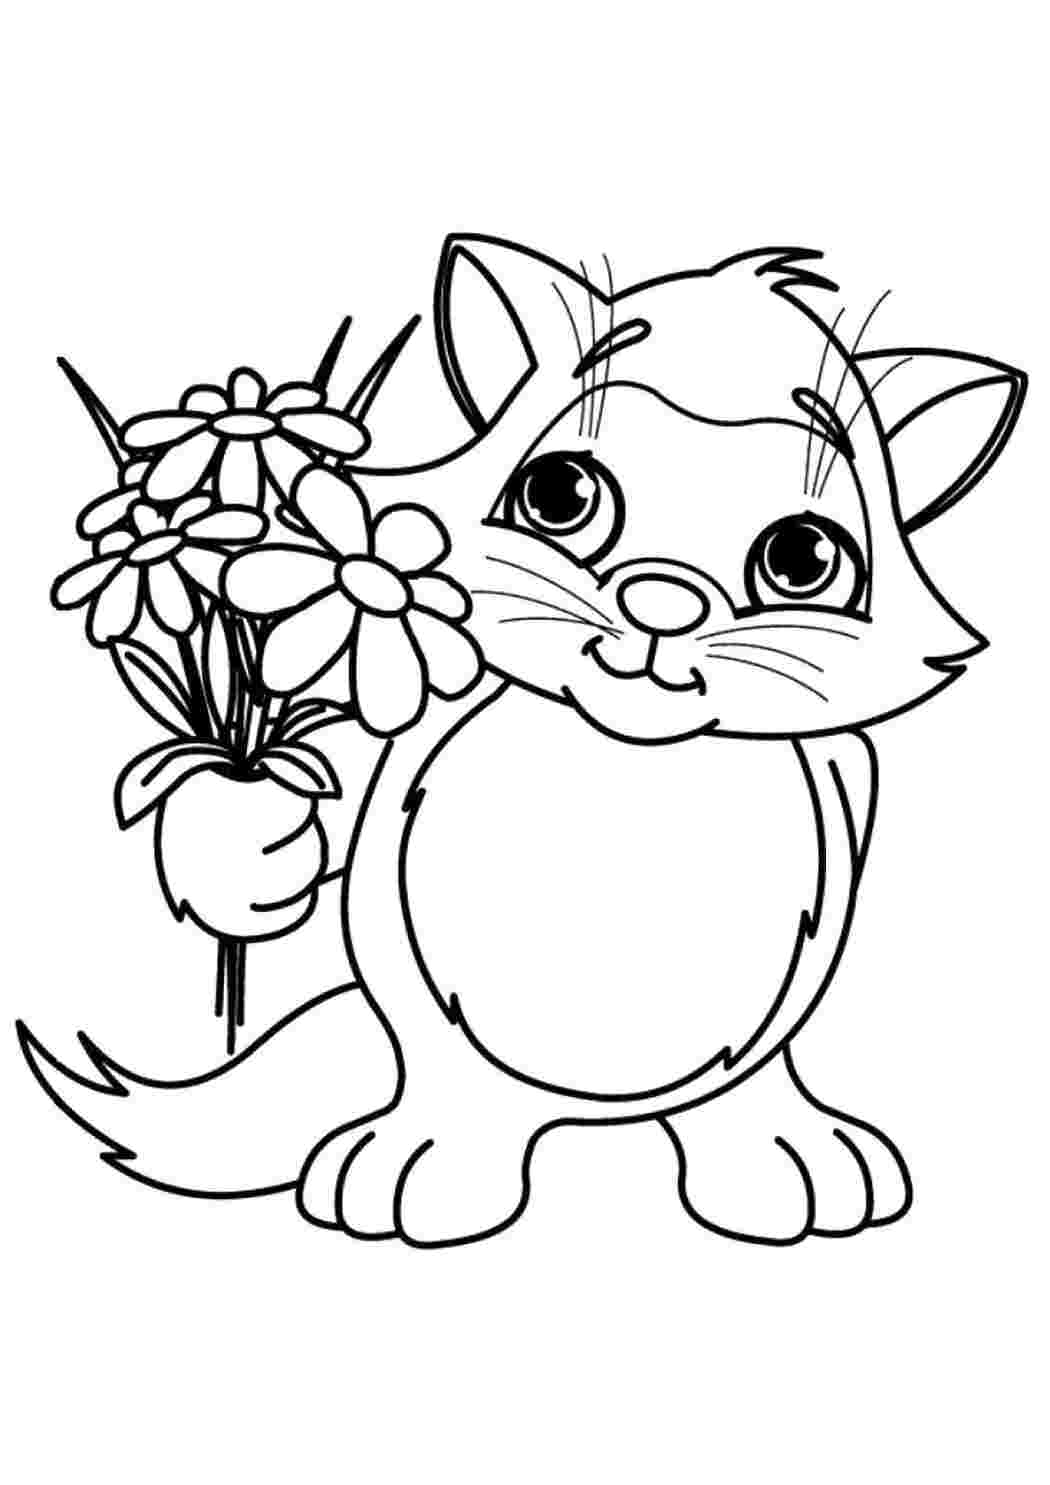 Картинки кот дарит цветы кошке (62 фото) » Картинки и статусы про окружающий мир вокруг